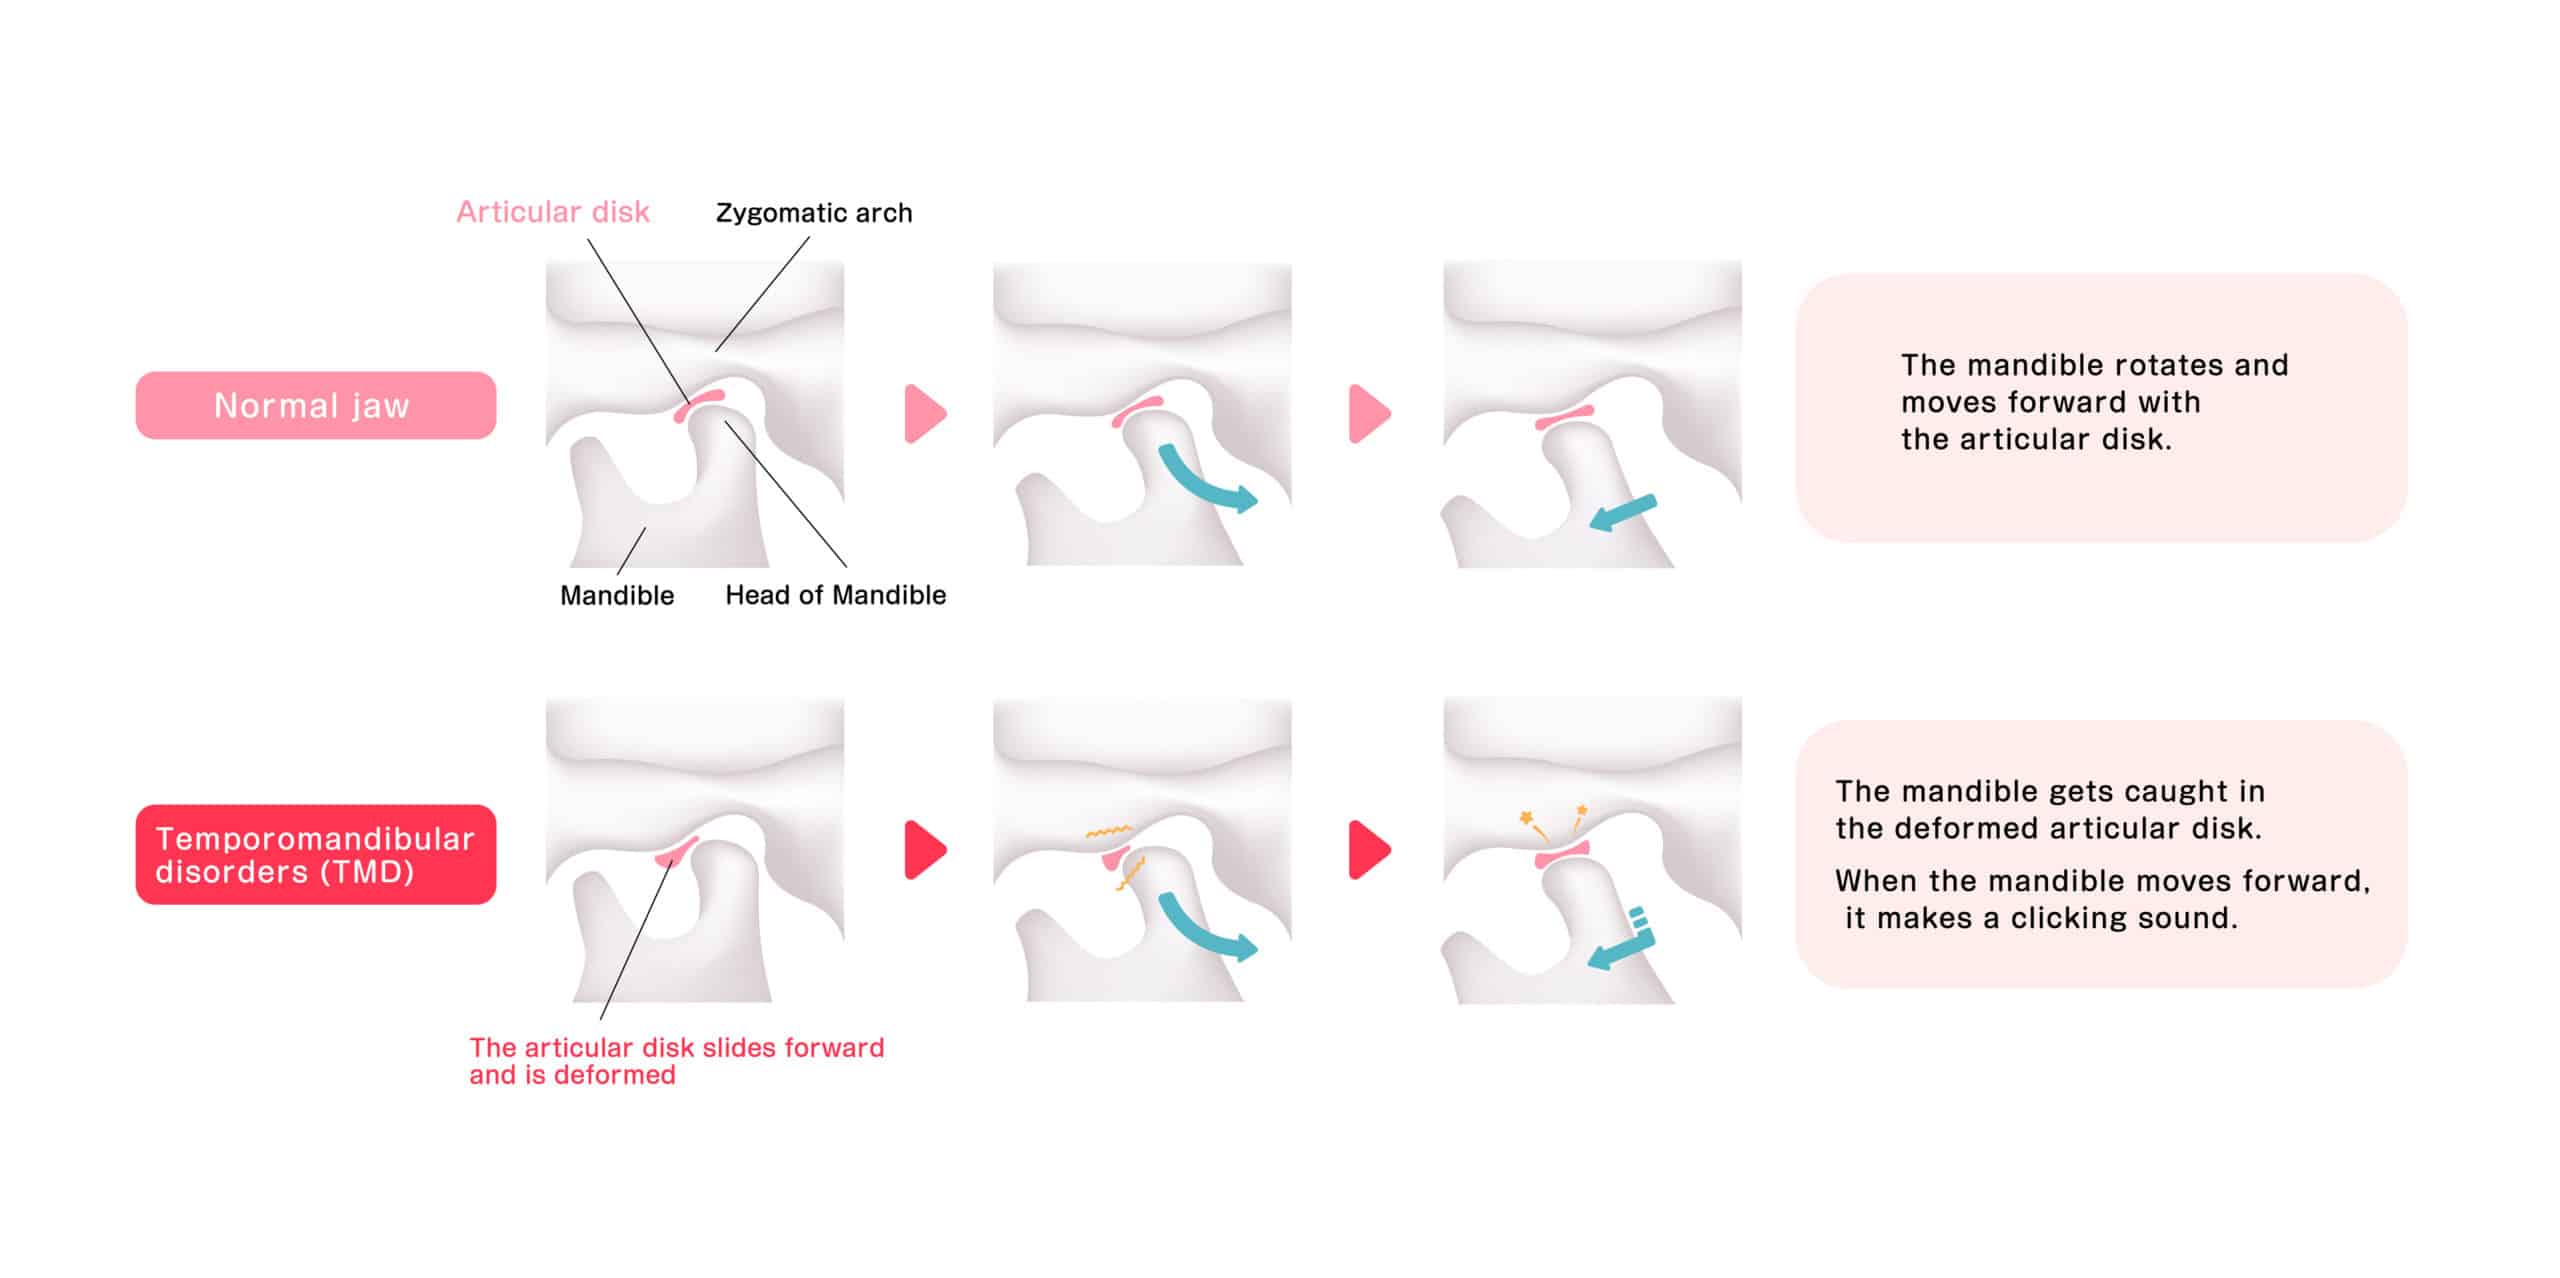 Comparison illustration of normal jaw and Temporomandibular disorders (TMD)